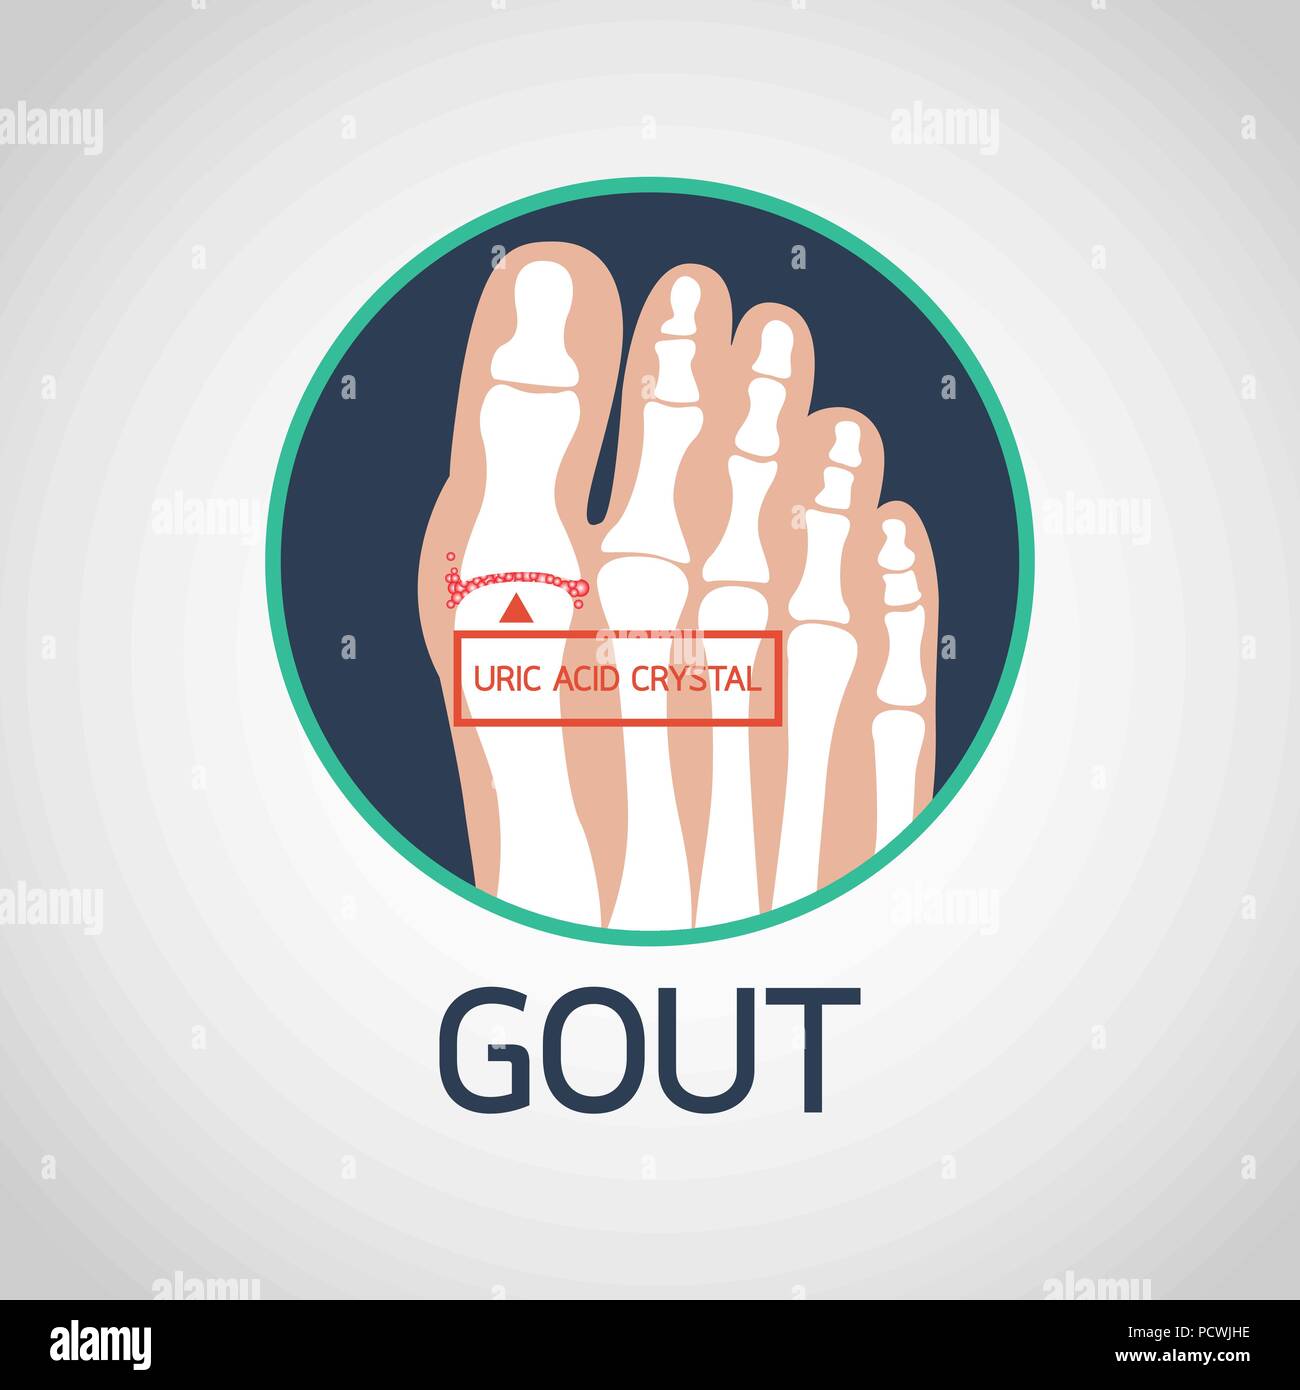 Gout vector logo icon illustration Stock Vector